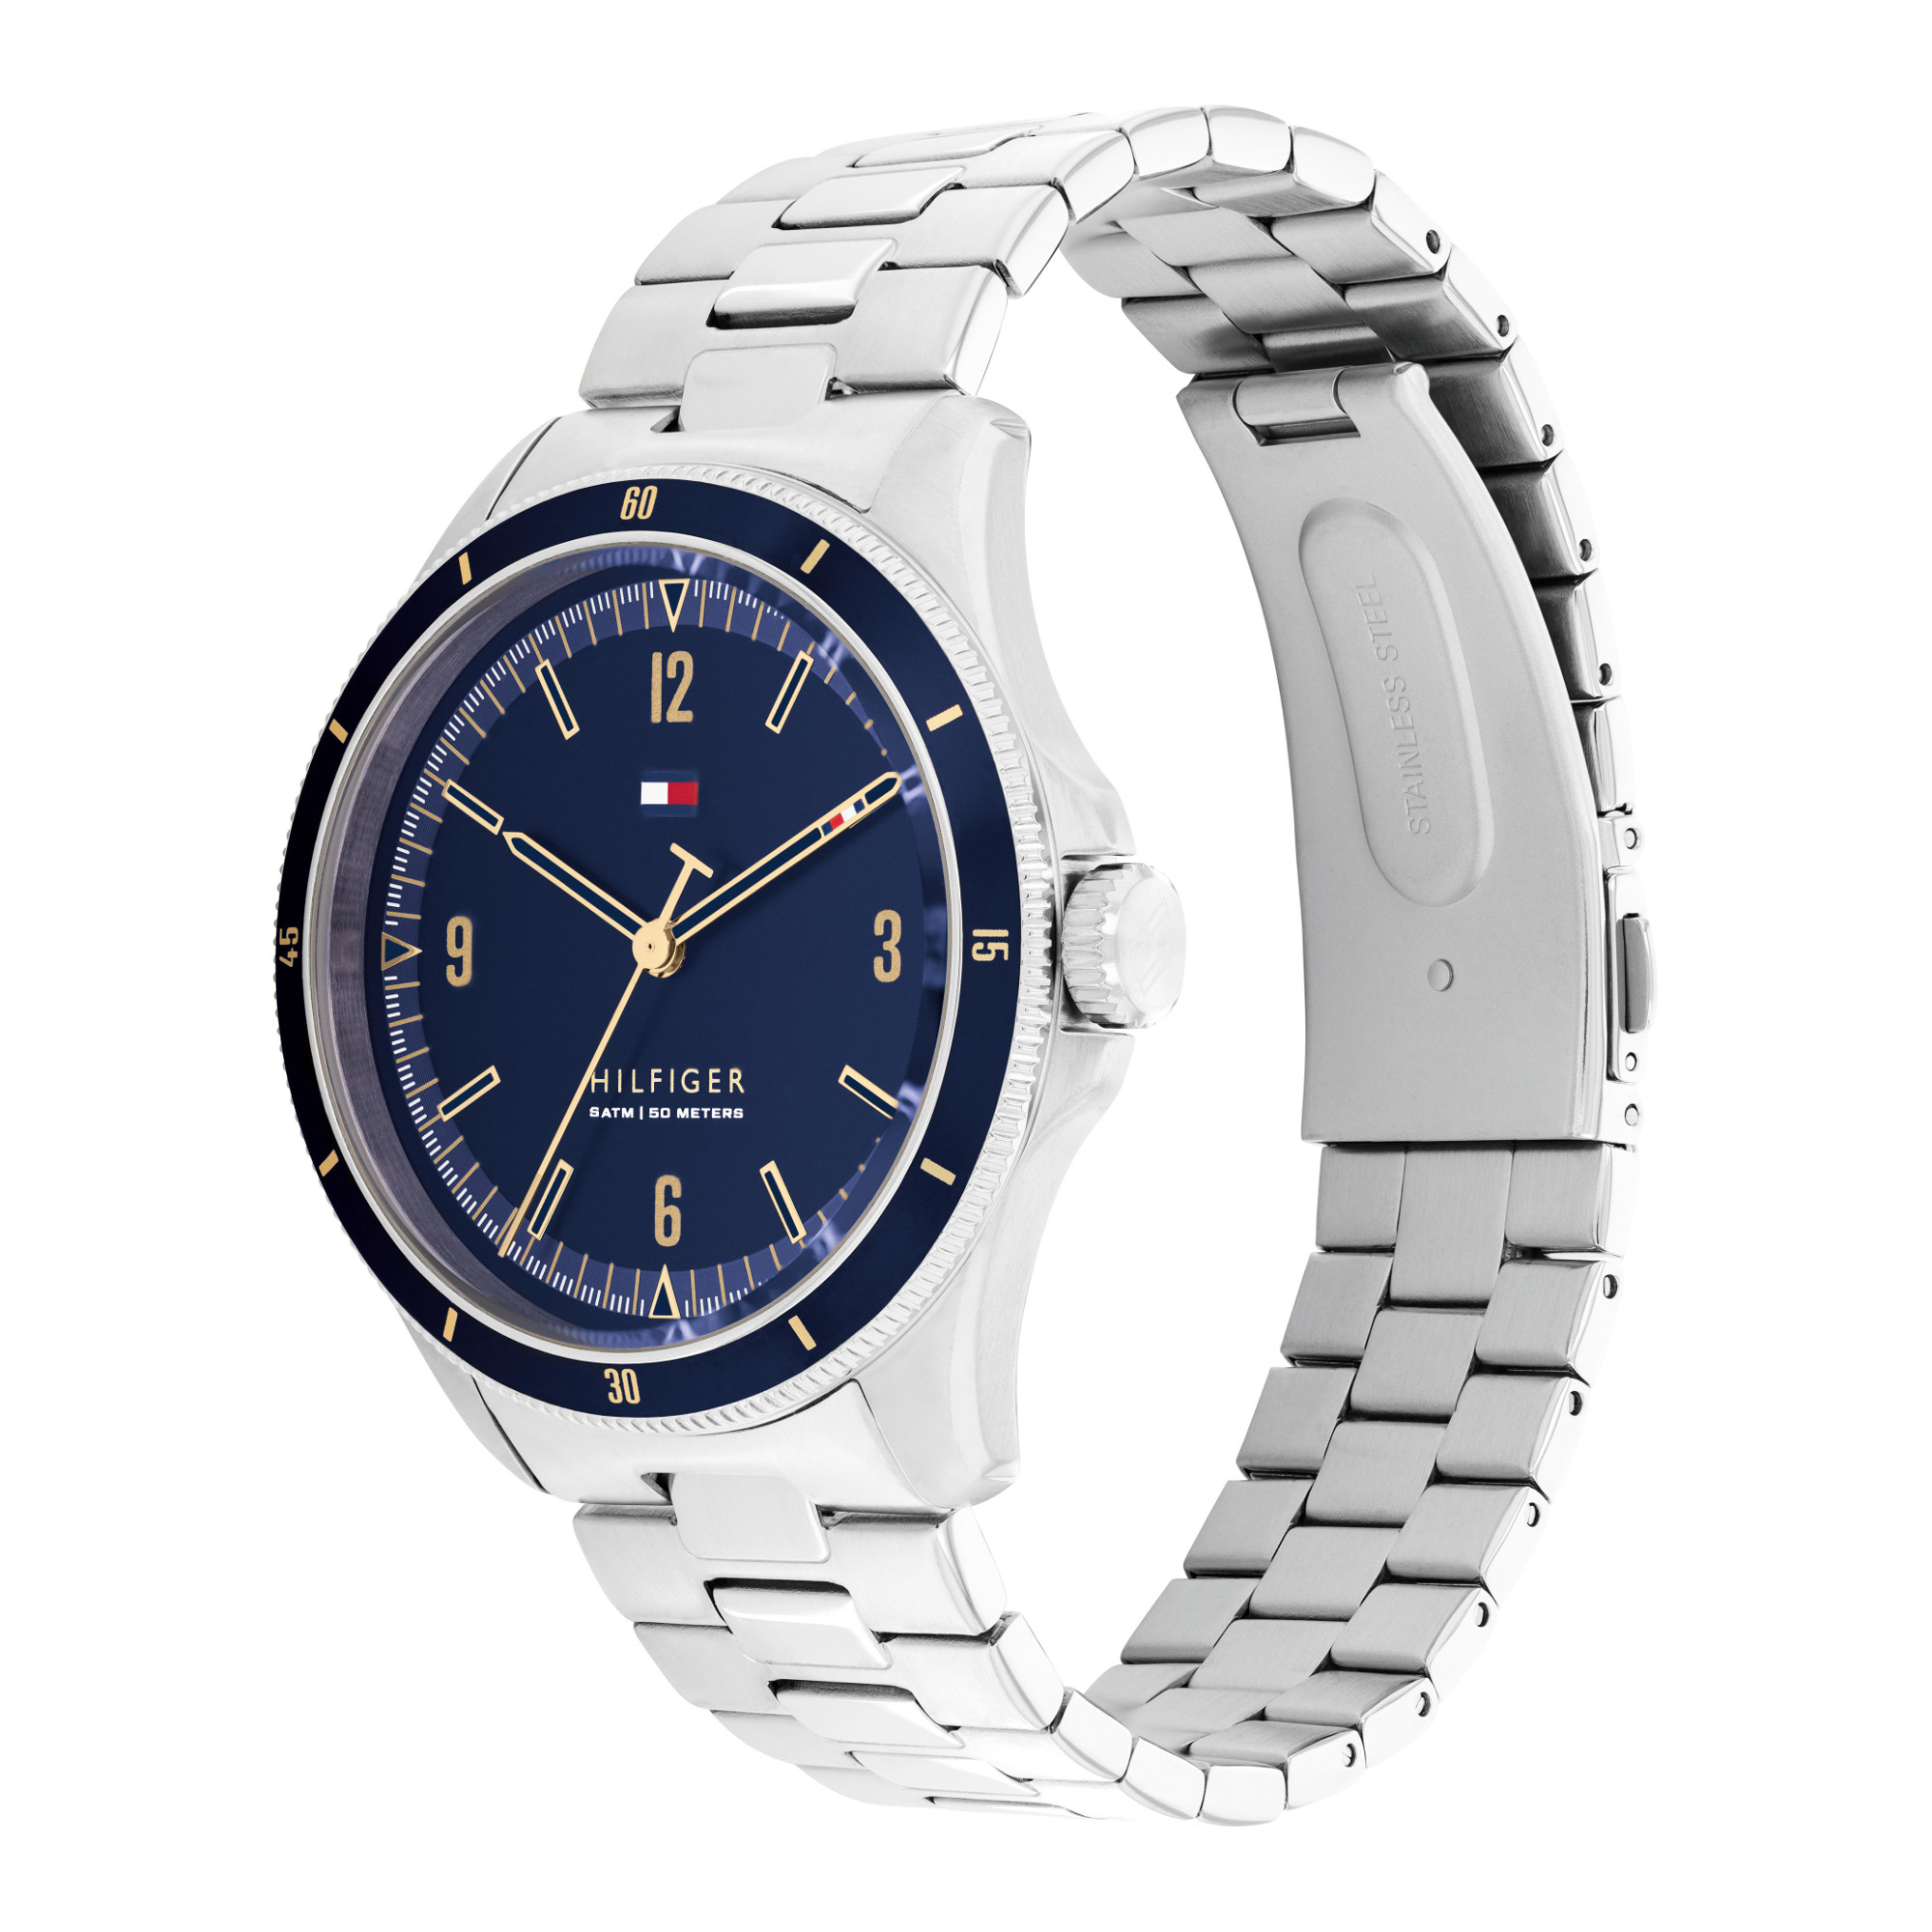 Tommy Hilfiger Men's Wrist Watch 1791902 Stainless Steel | eBay